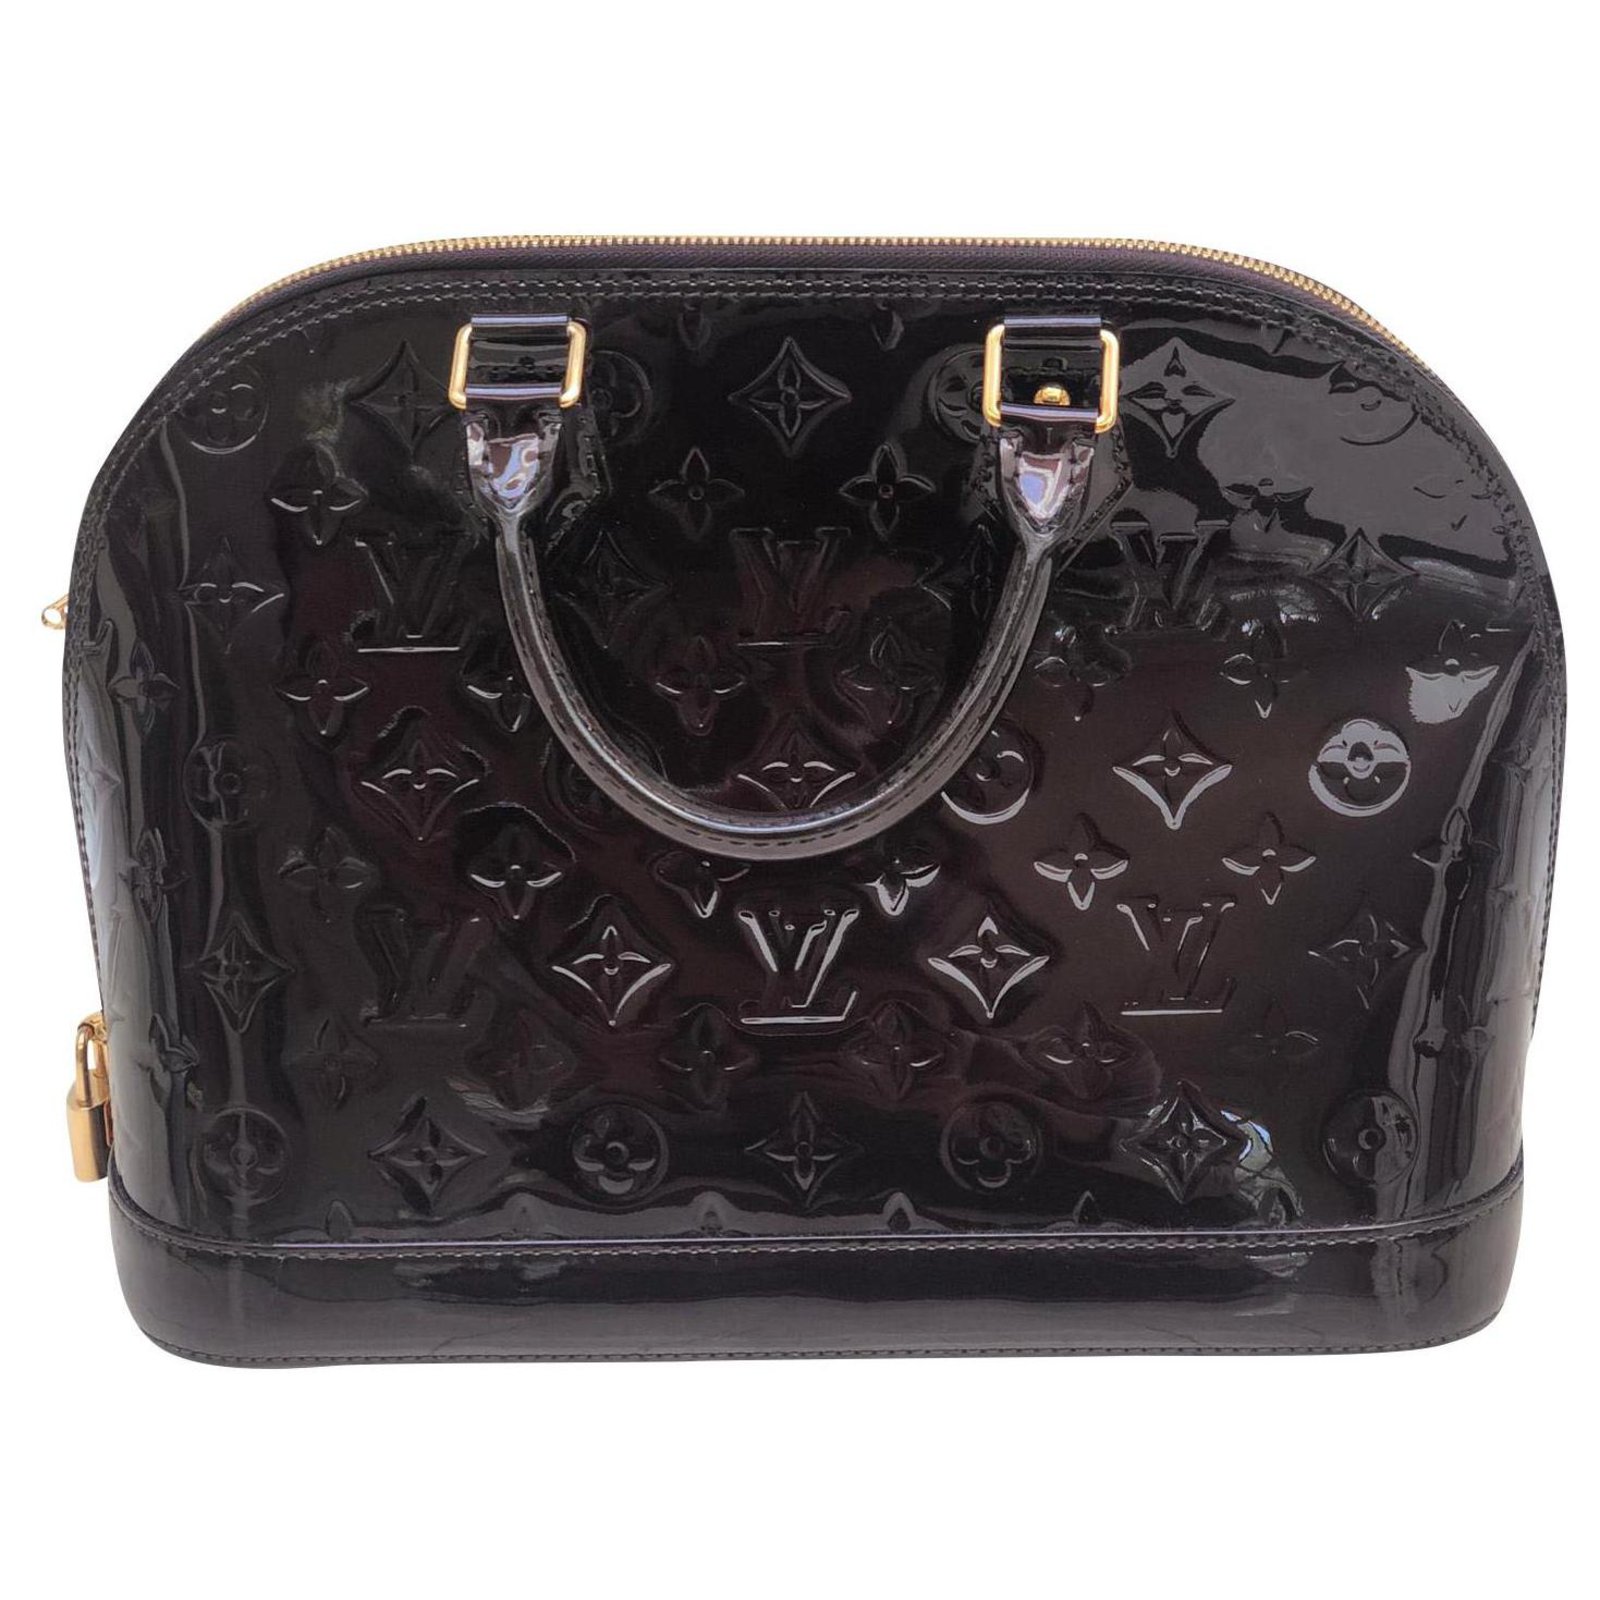 Alma patent leather handbag Louis Vuitton Black in Patent leather